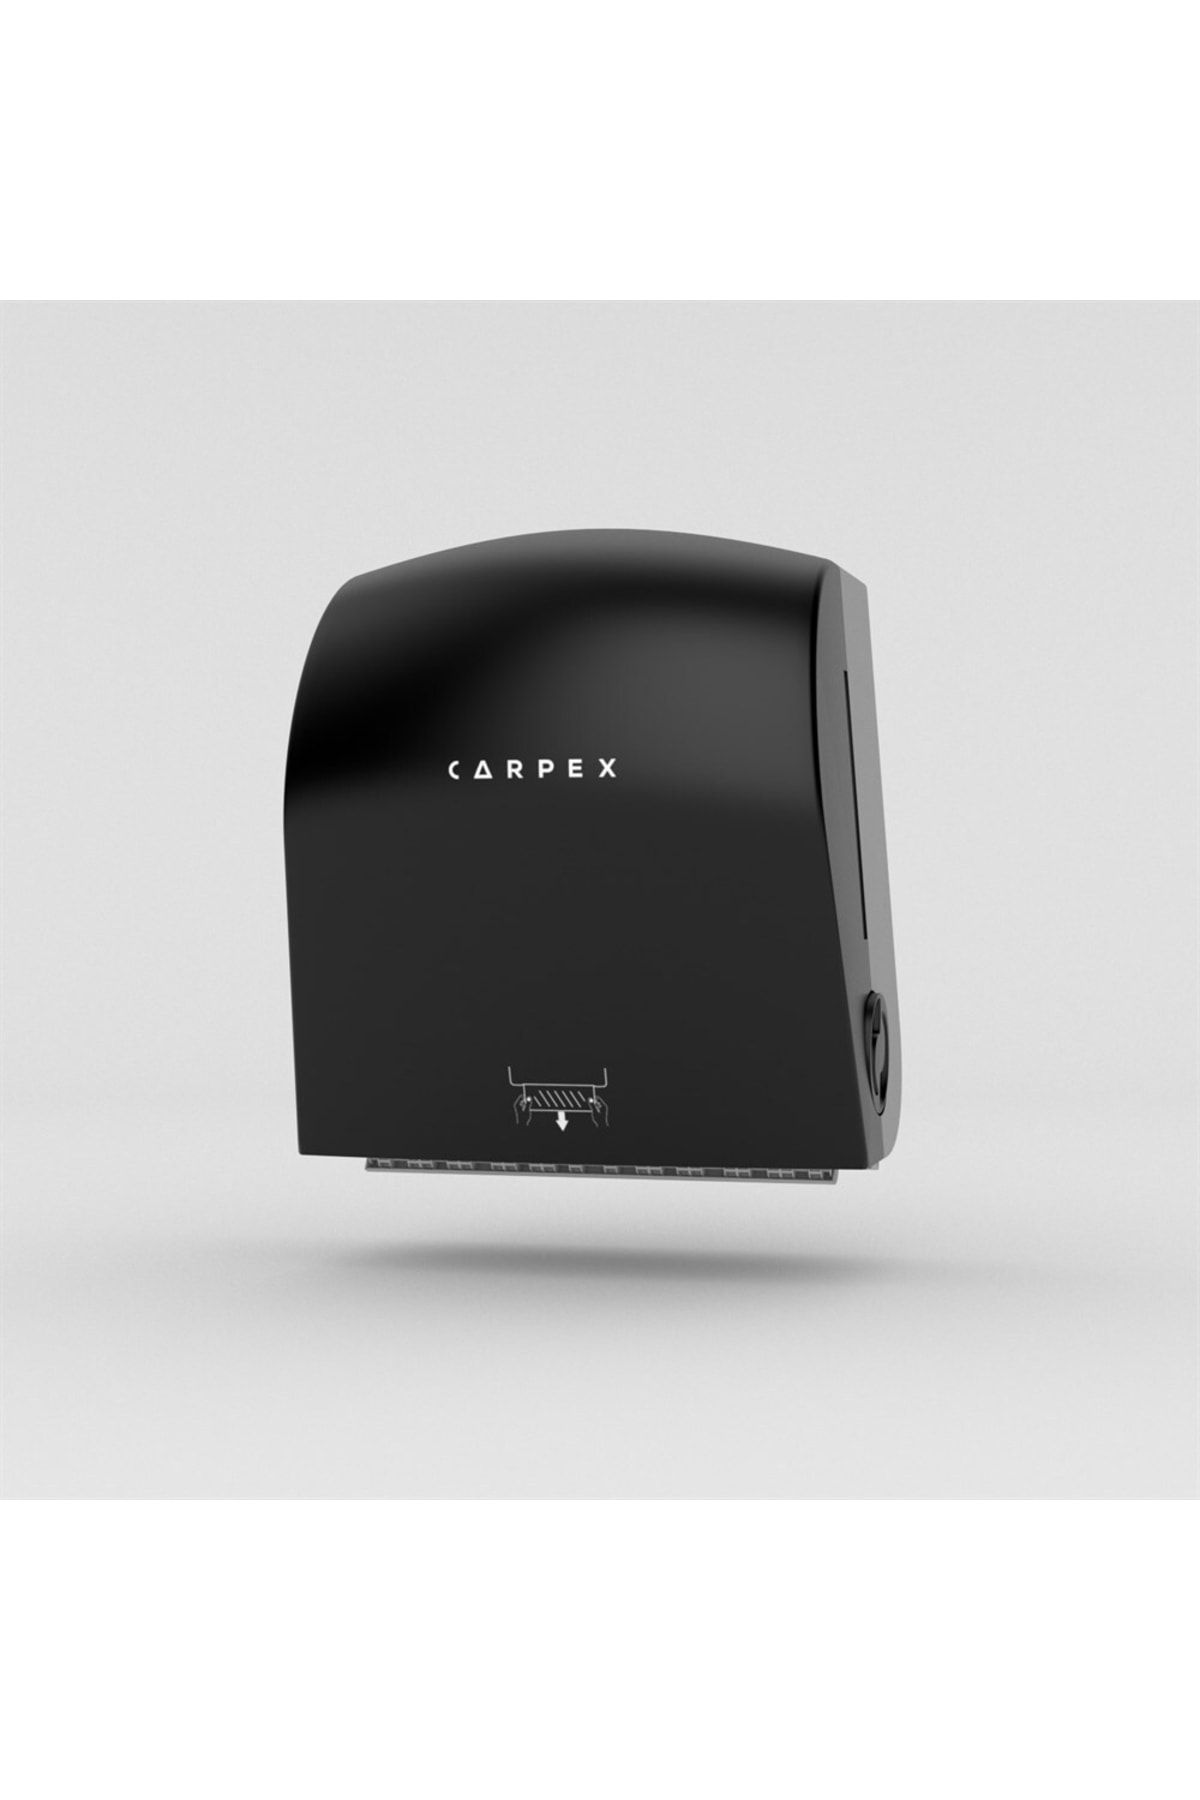 Carpex Autocut Manuel Kağıt Havlu Makinesi Siyah